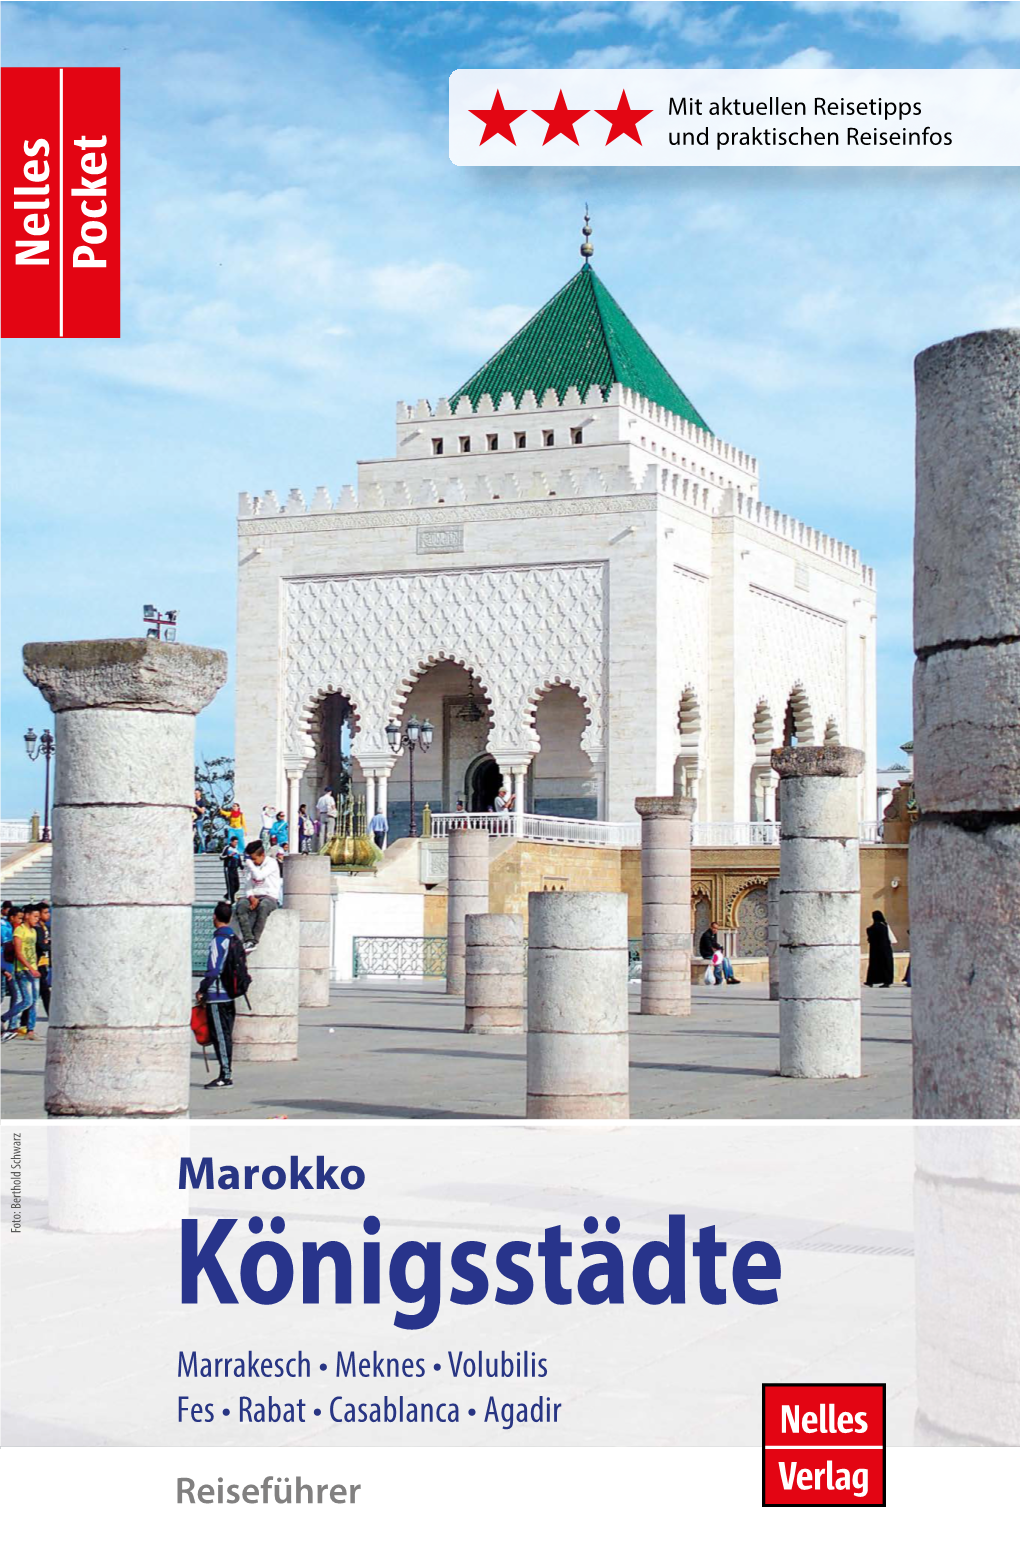 Königsstädte Marrakesch • Meknes • Volubilis Fes • Rabat • Casablanca • Agadir Nelles Reiseführer Verlag